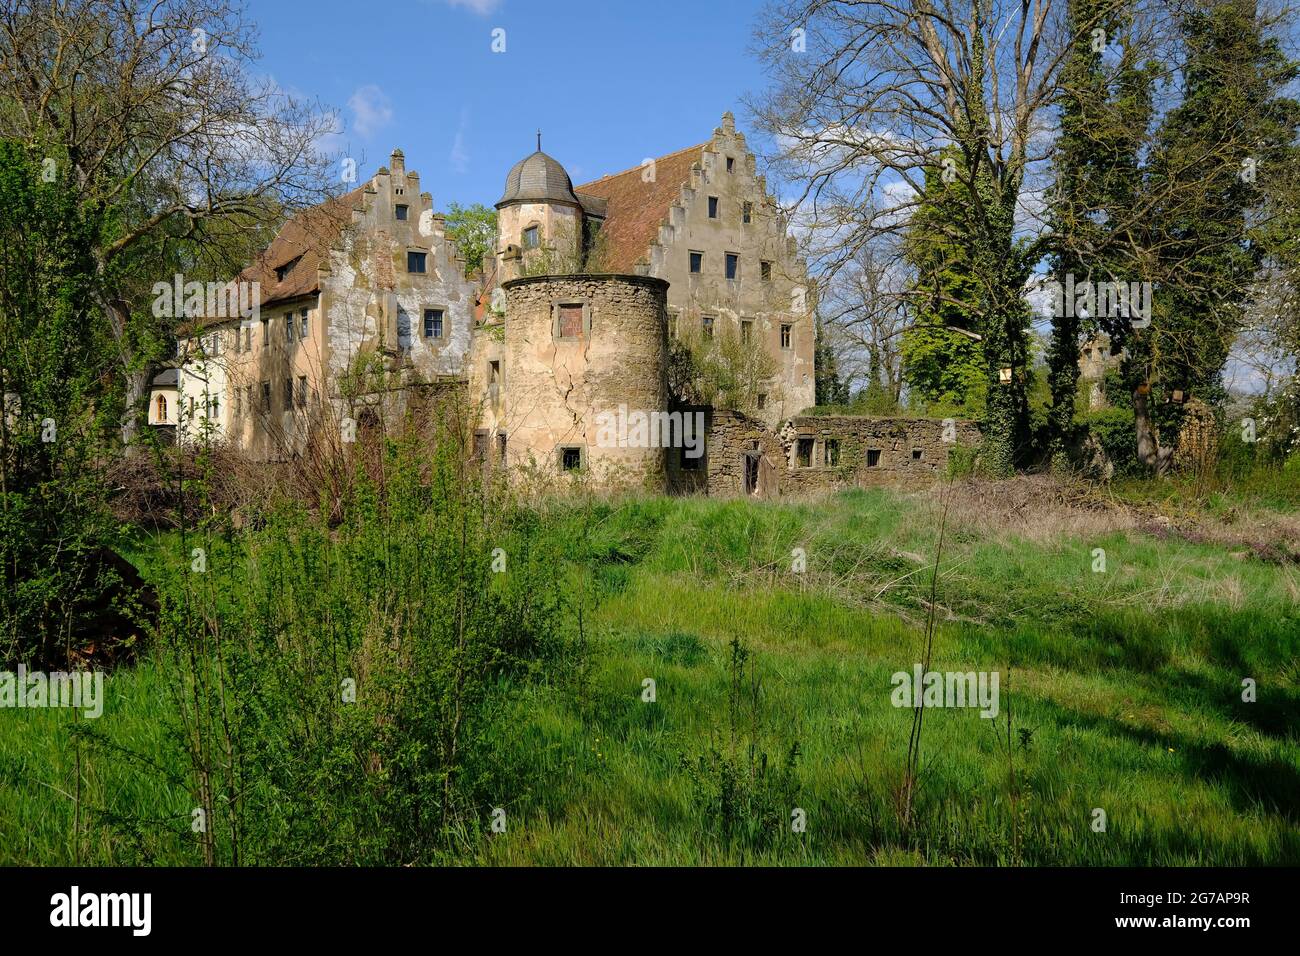 Castle in Schwebheim, Schweinfurt district, Lower Franconia, Franconia, Bavaria, Germany Stock Photo